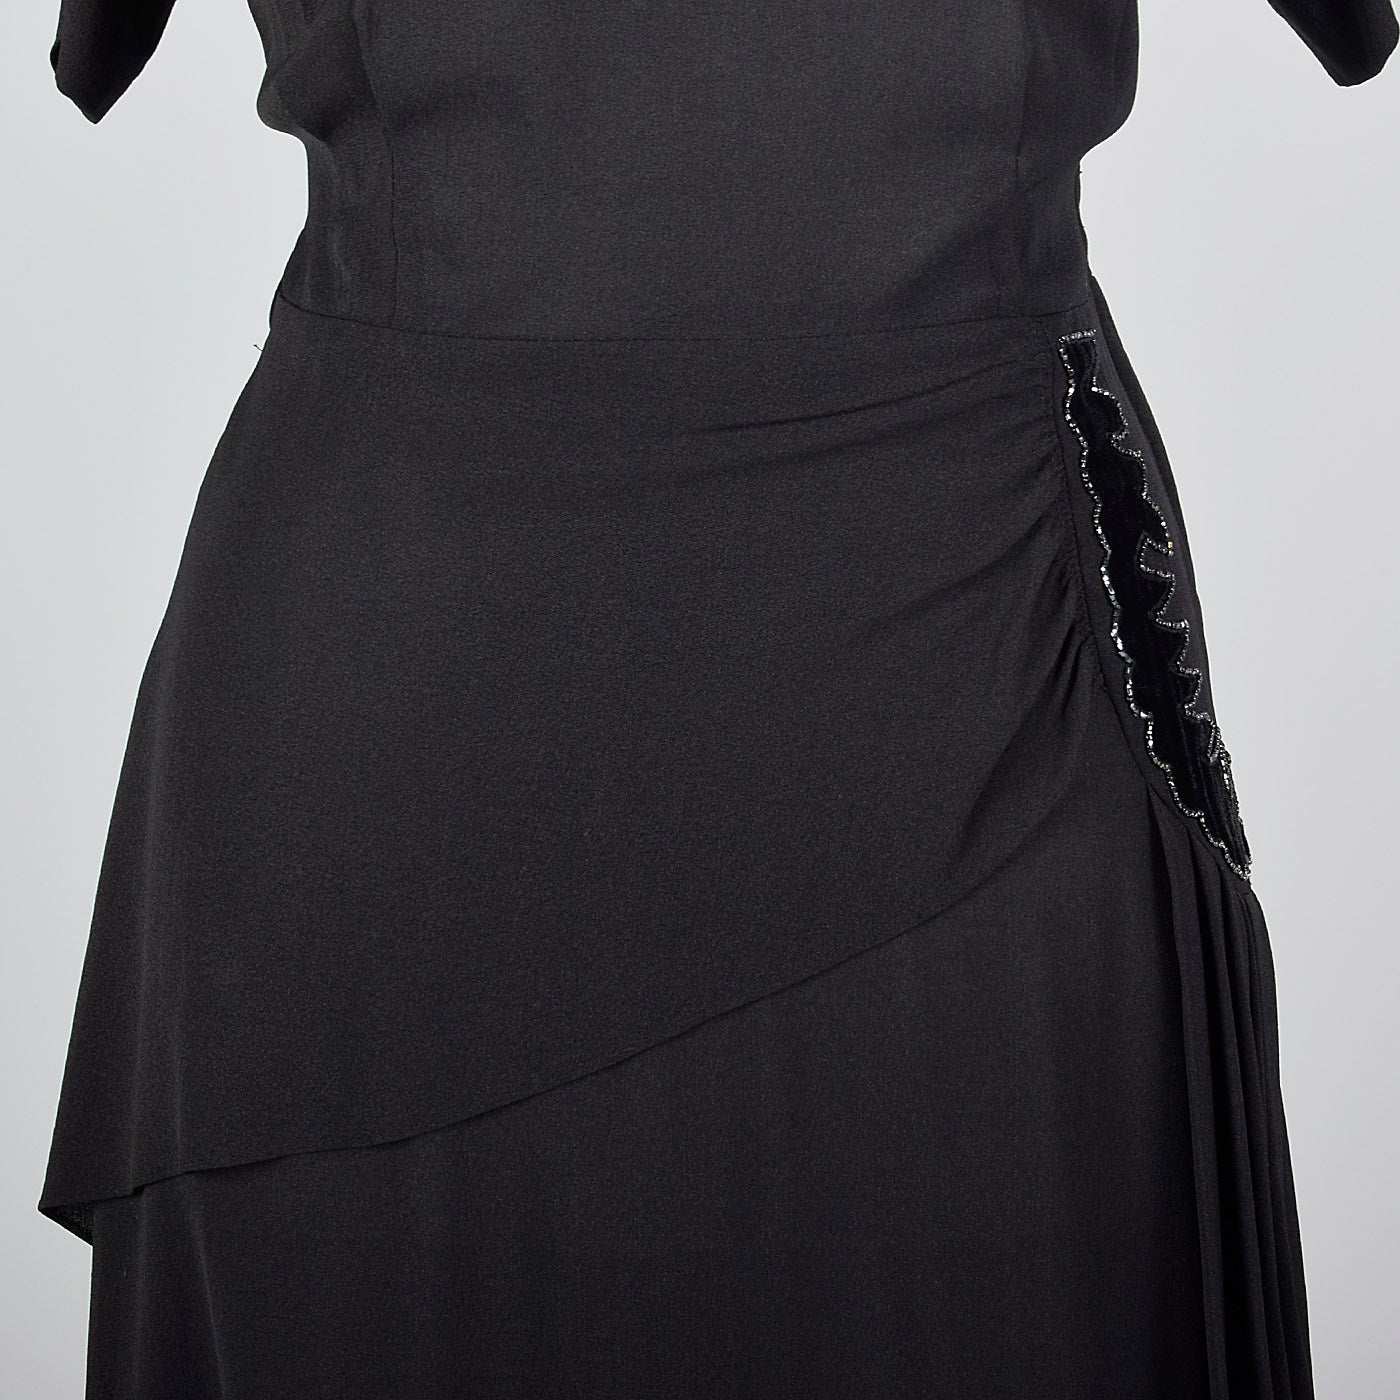 1950s Black Rayon Dress with Velvet Trim